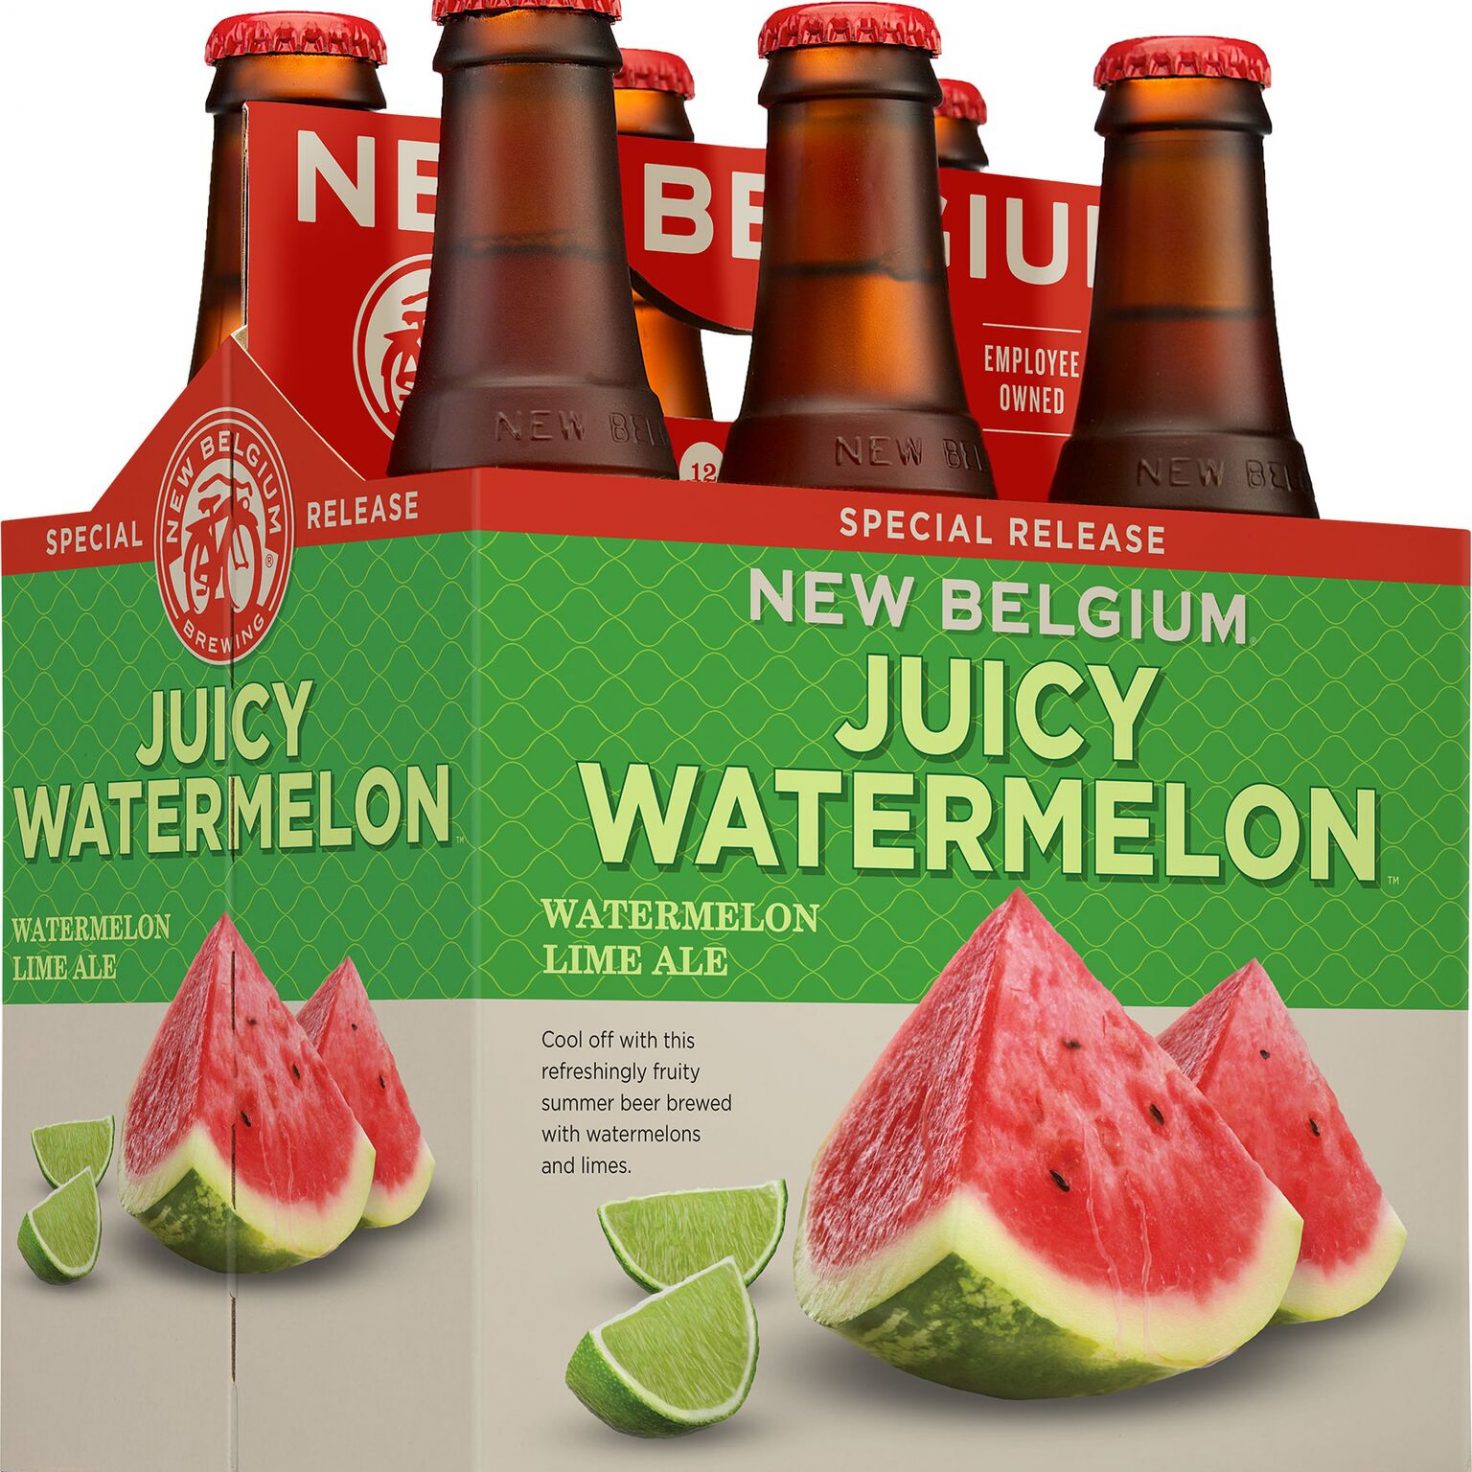 New Belgium Juicy Watermelon